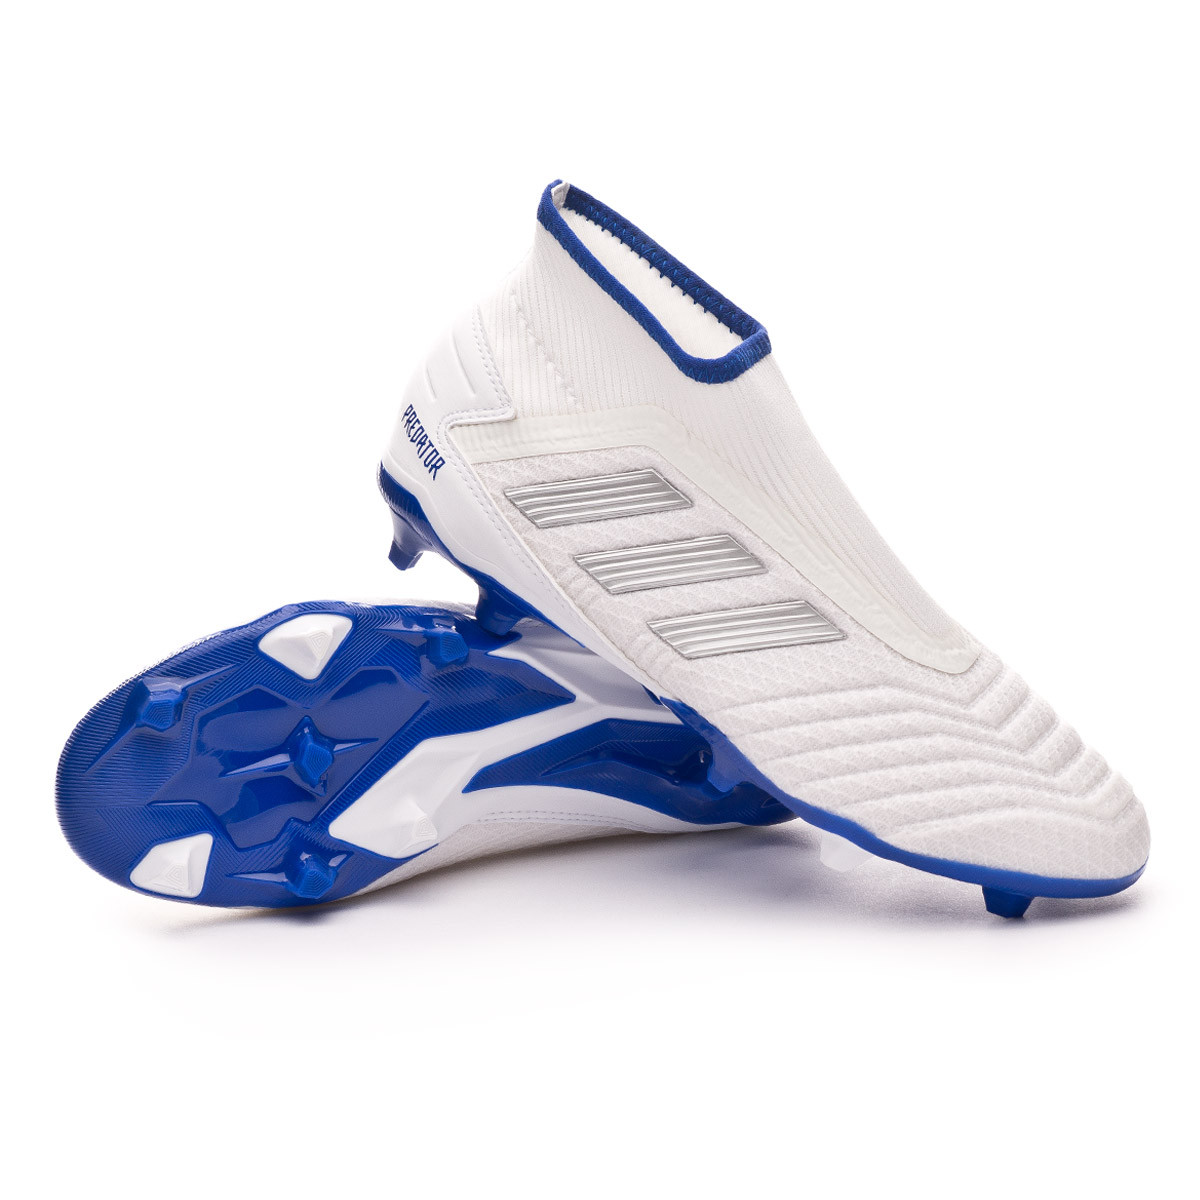 adidas predator 19.3 white and blue